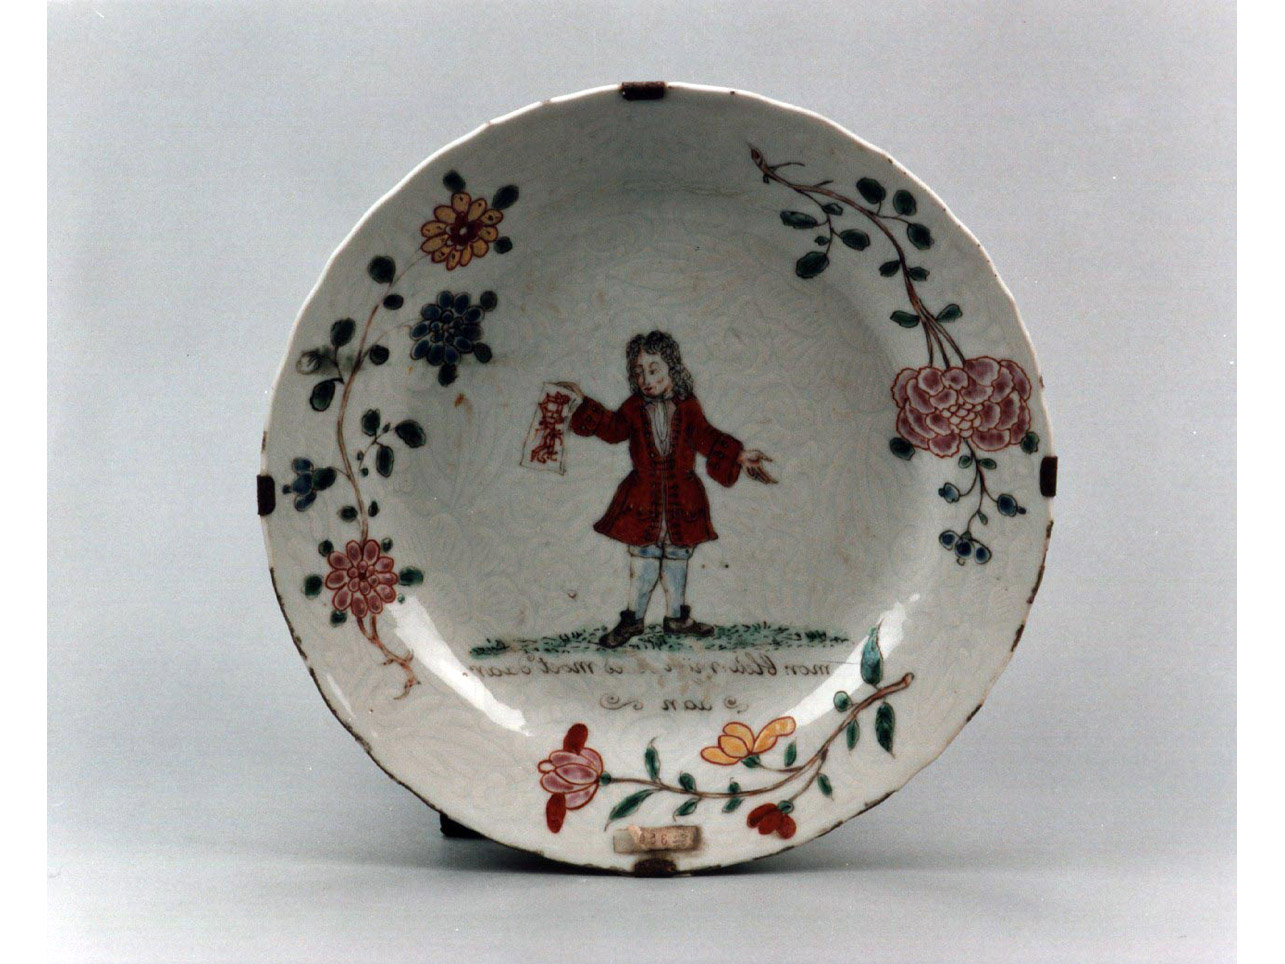 figura di gentiluomo/ motivi decorativi floreali (piatto) - manifattura olandese, manifattura cinese (sec. XVIII)